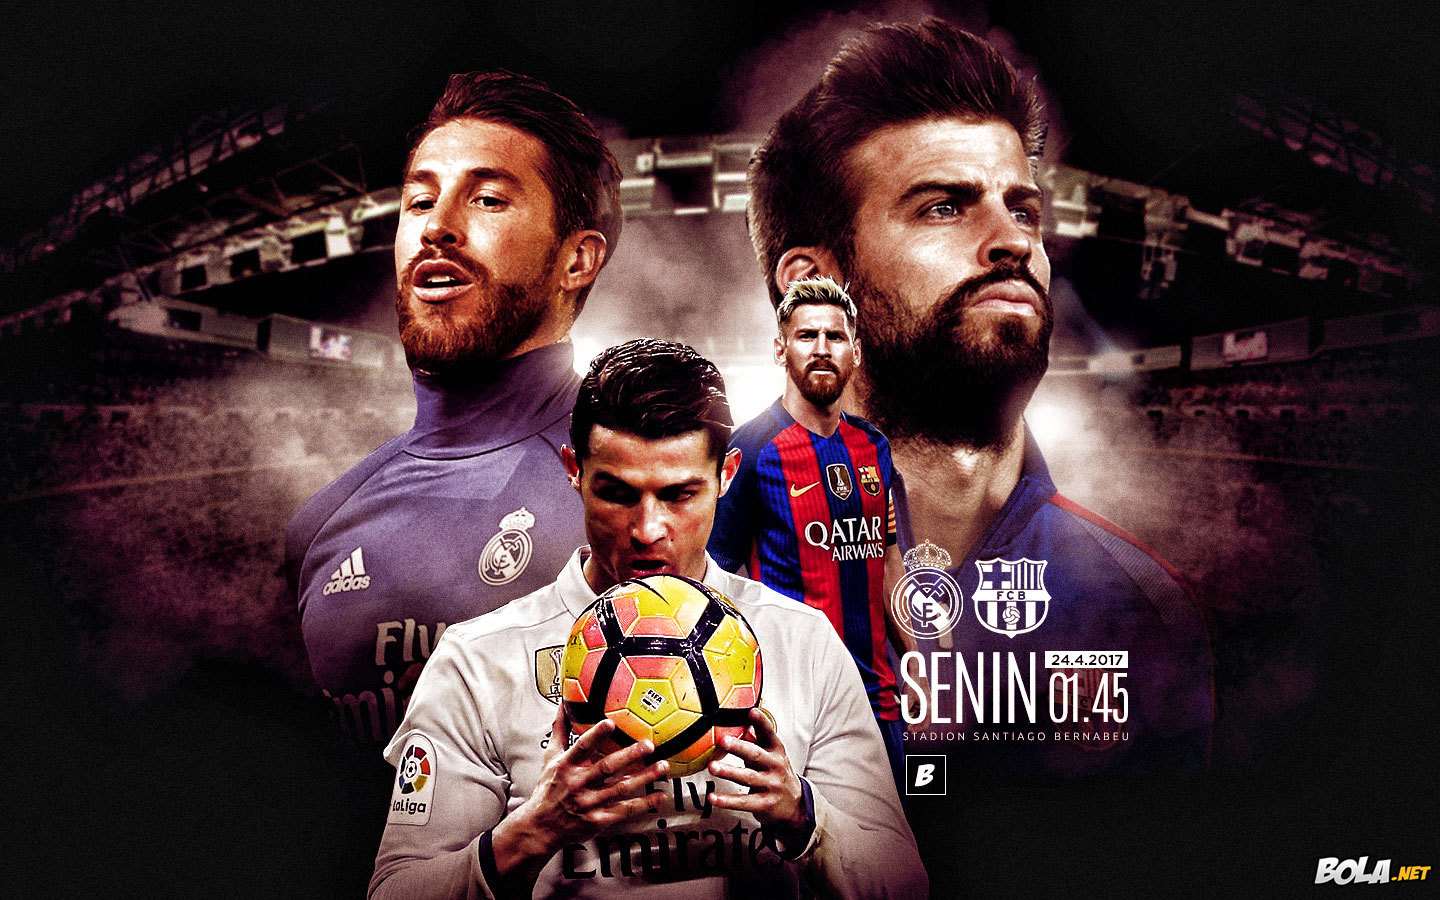 Deskripsi : Wallpaper Real Madrid Vs Barcelona, size: 1440x900